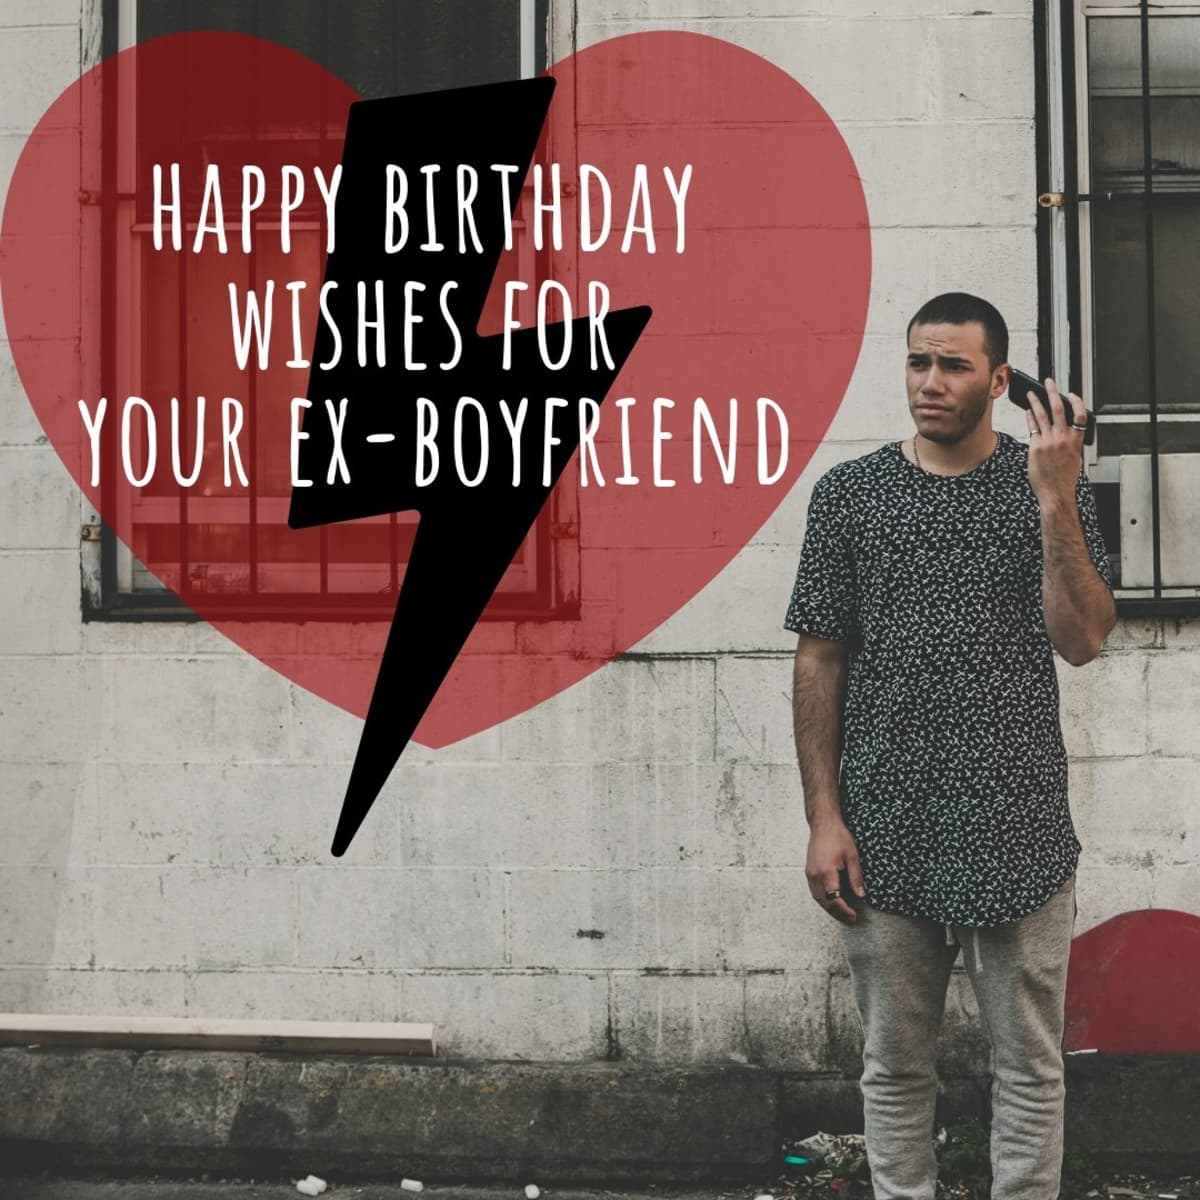 happy birthday quotes for ex boyfriend